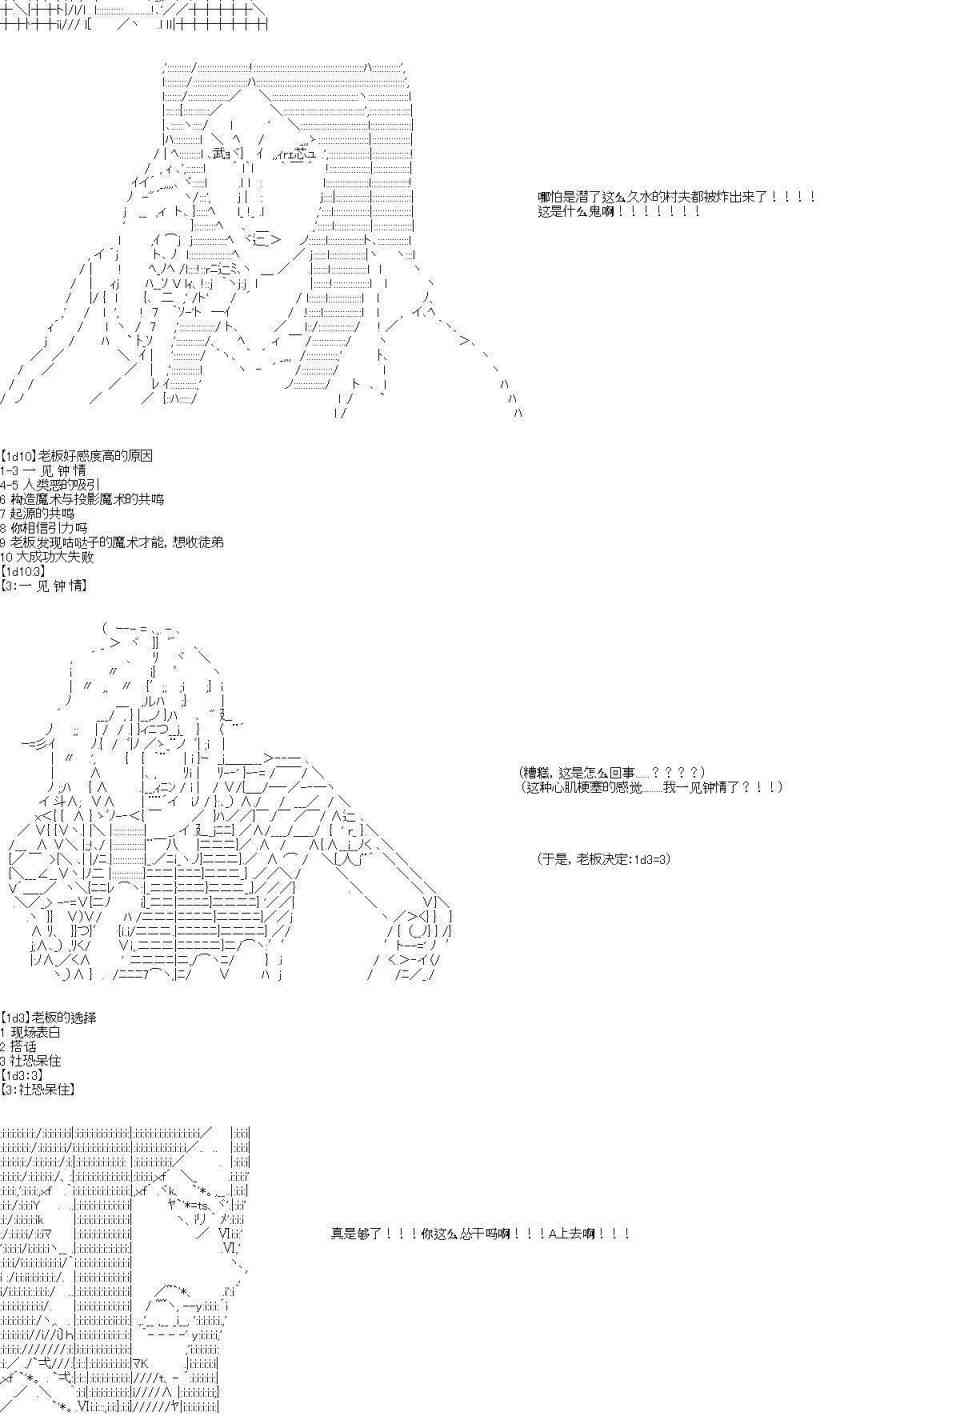 Fate/Grand Order-黃金精神的迪亞波羅正在拯救人理 - 6話(2/2) - 2